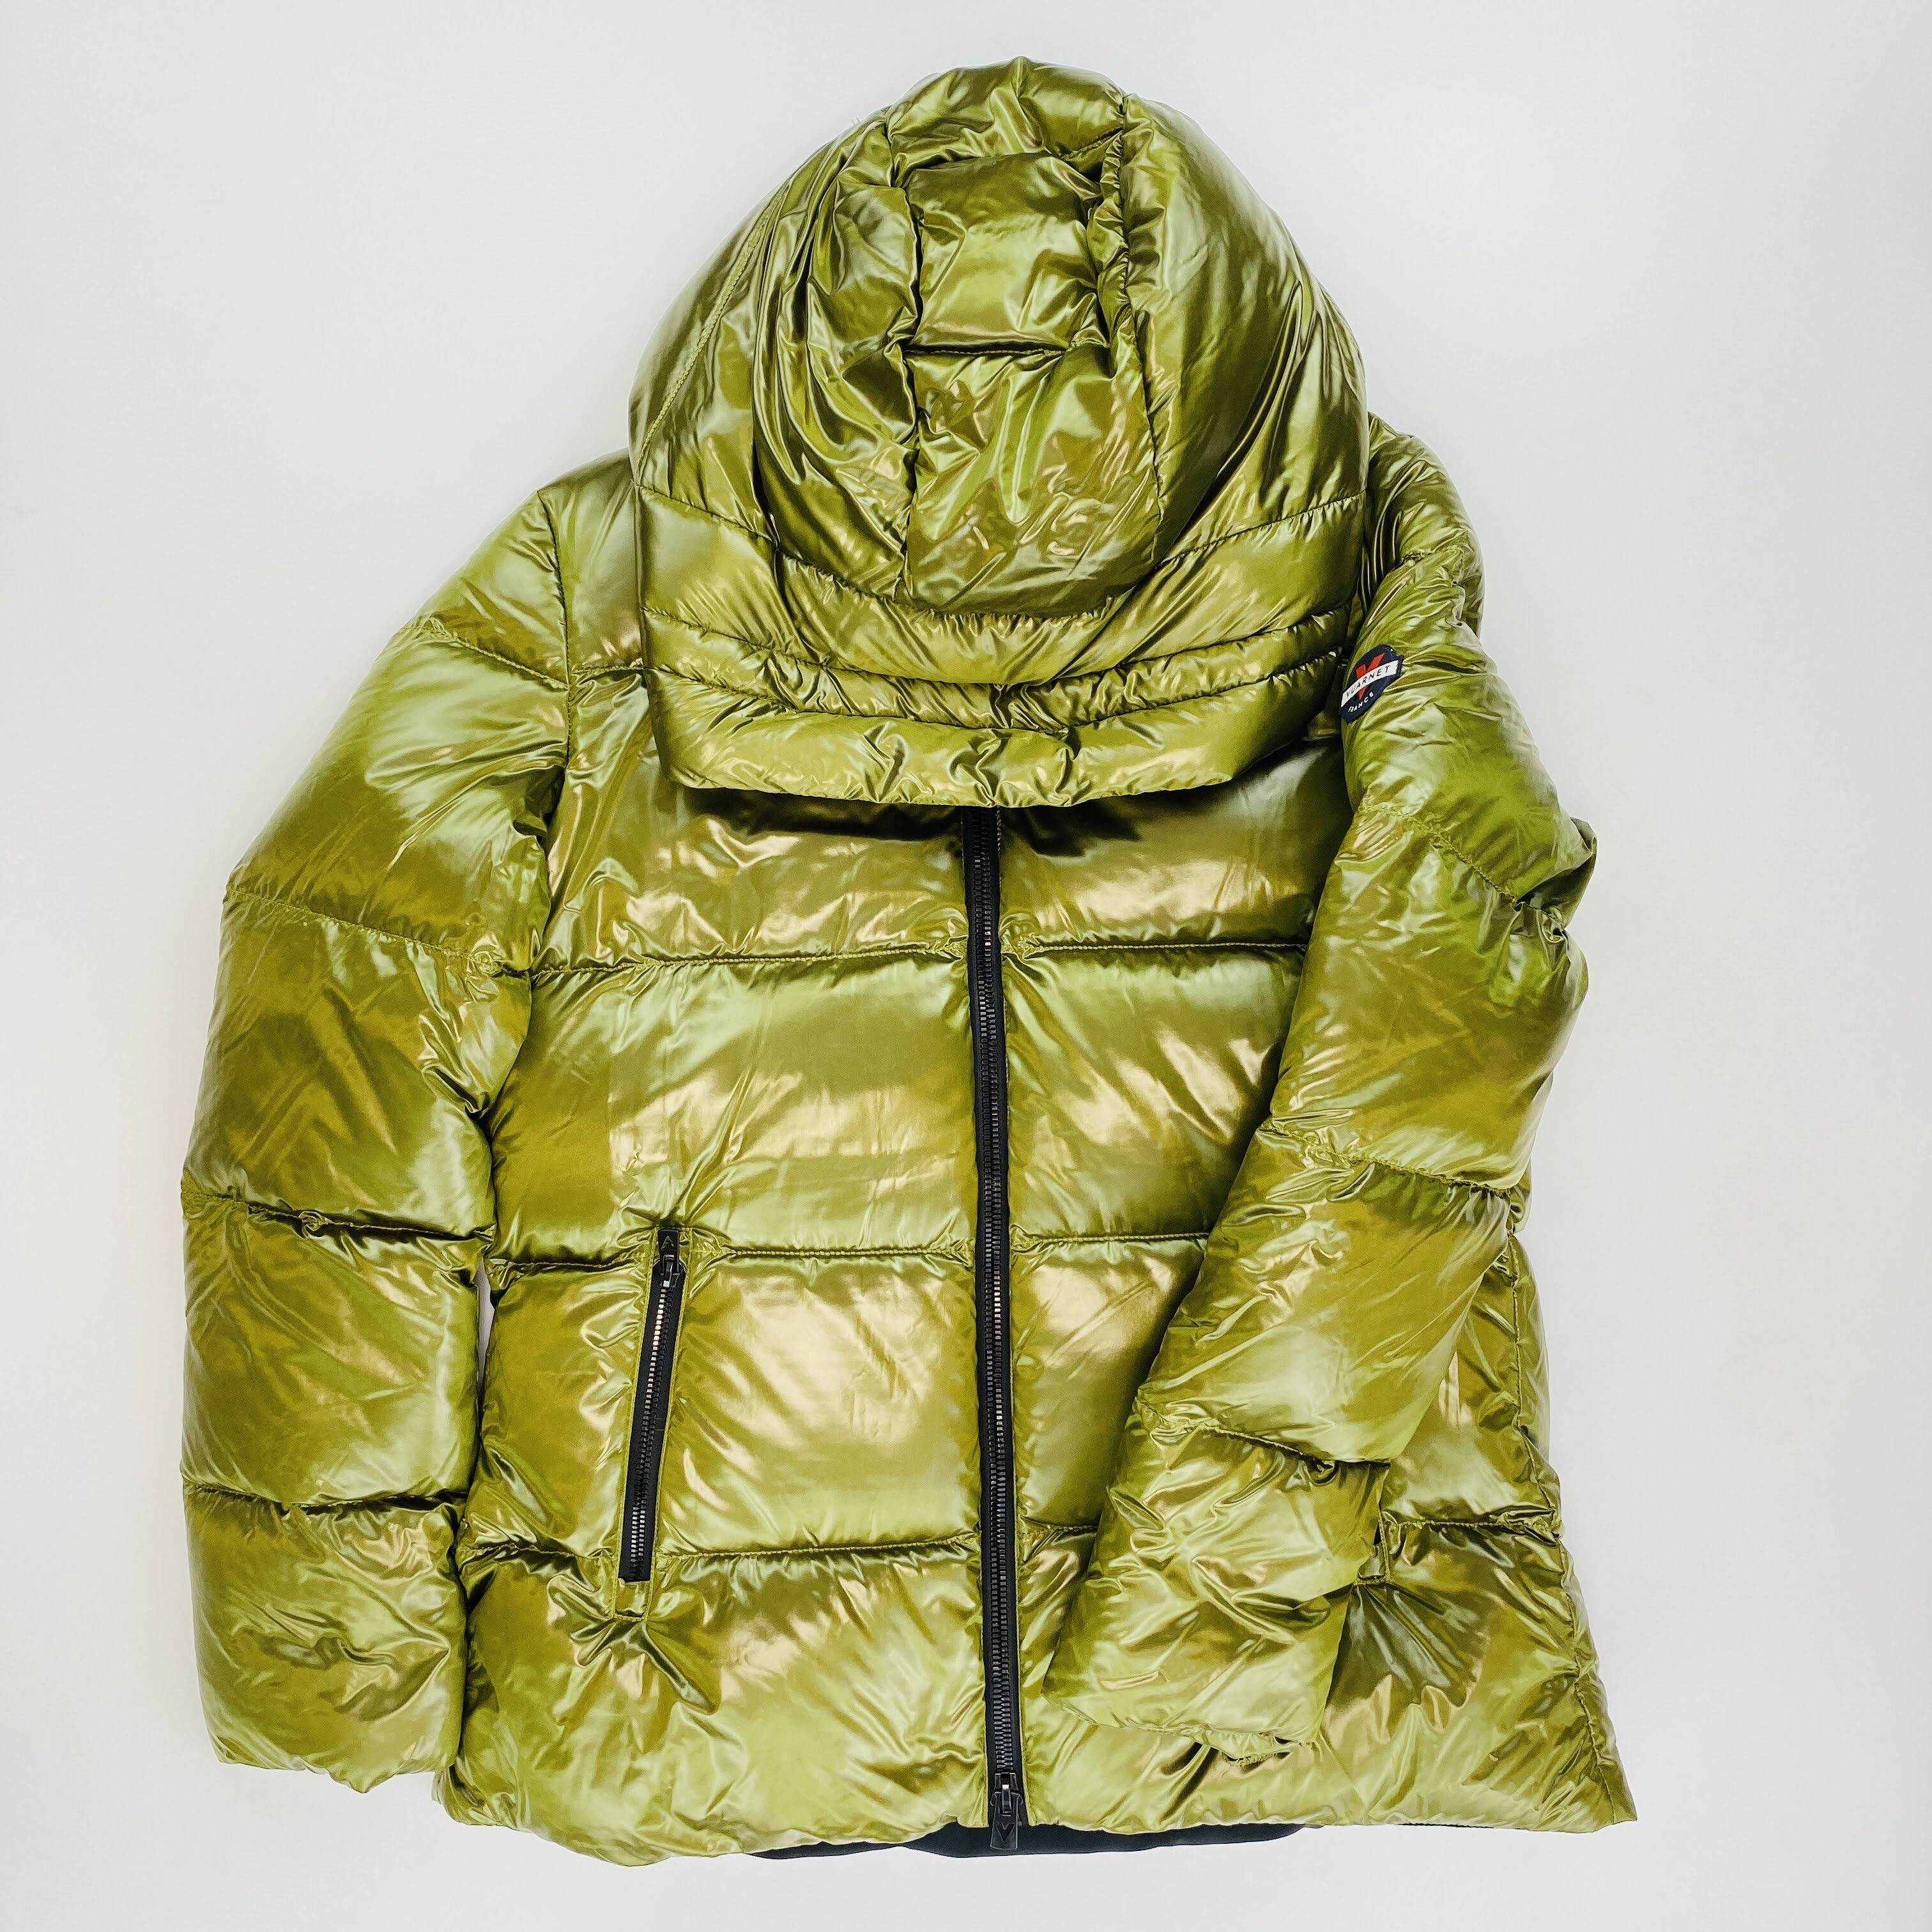 Vuarnet Orange Jacket - Second Hand Synthetic jacket - Women's - Olive green - S | Hardloop